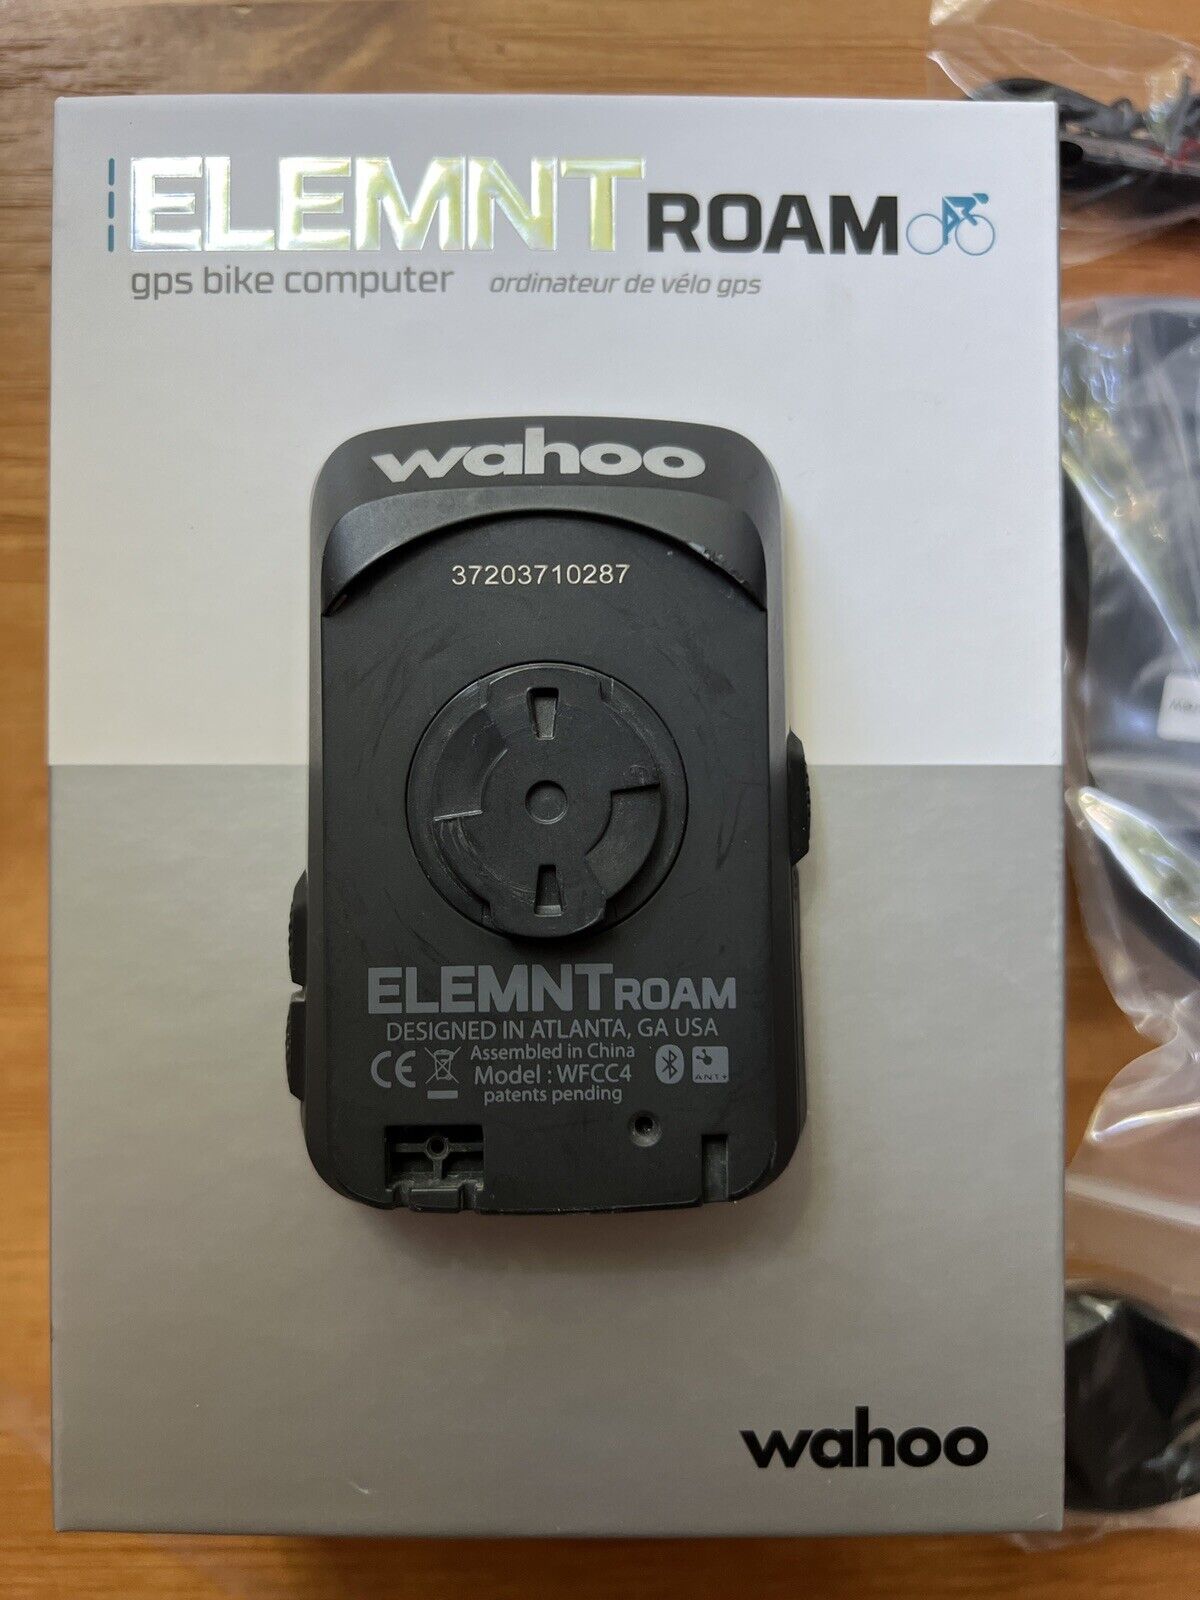 Wahoo Elemnt Roam GPS Bike Computer - WFCC4 for sale online | eBay